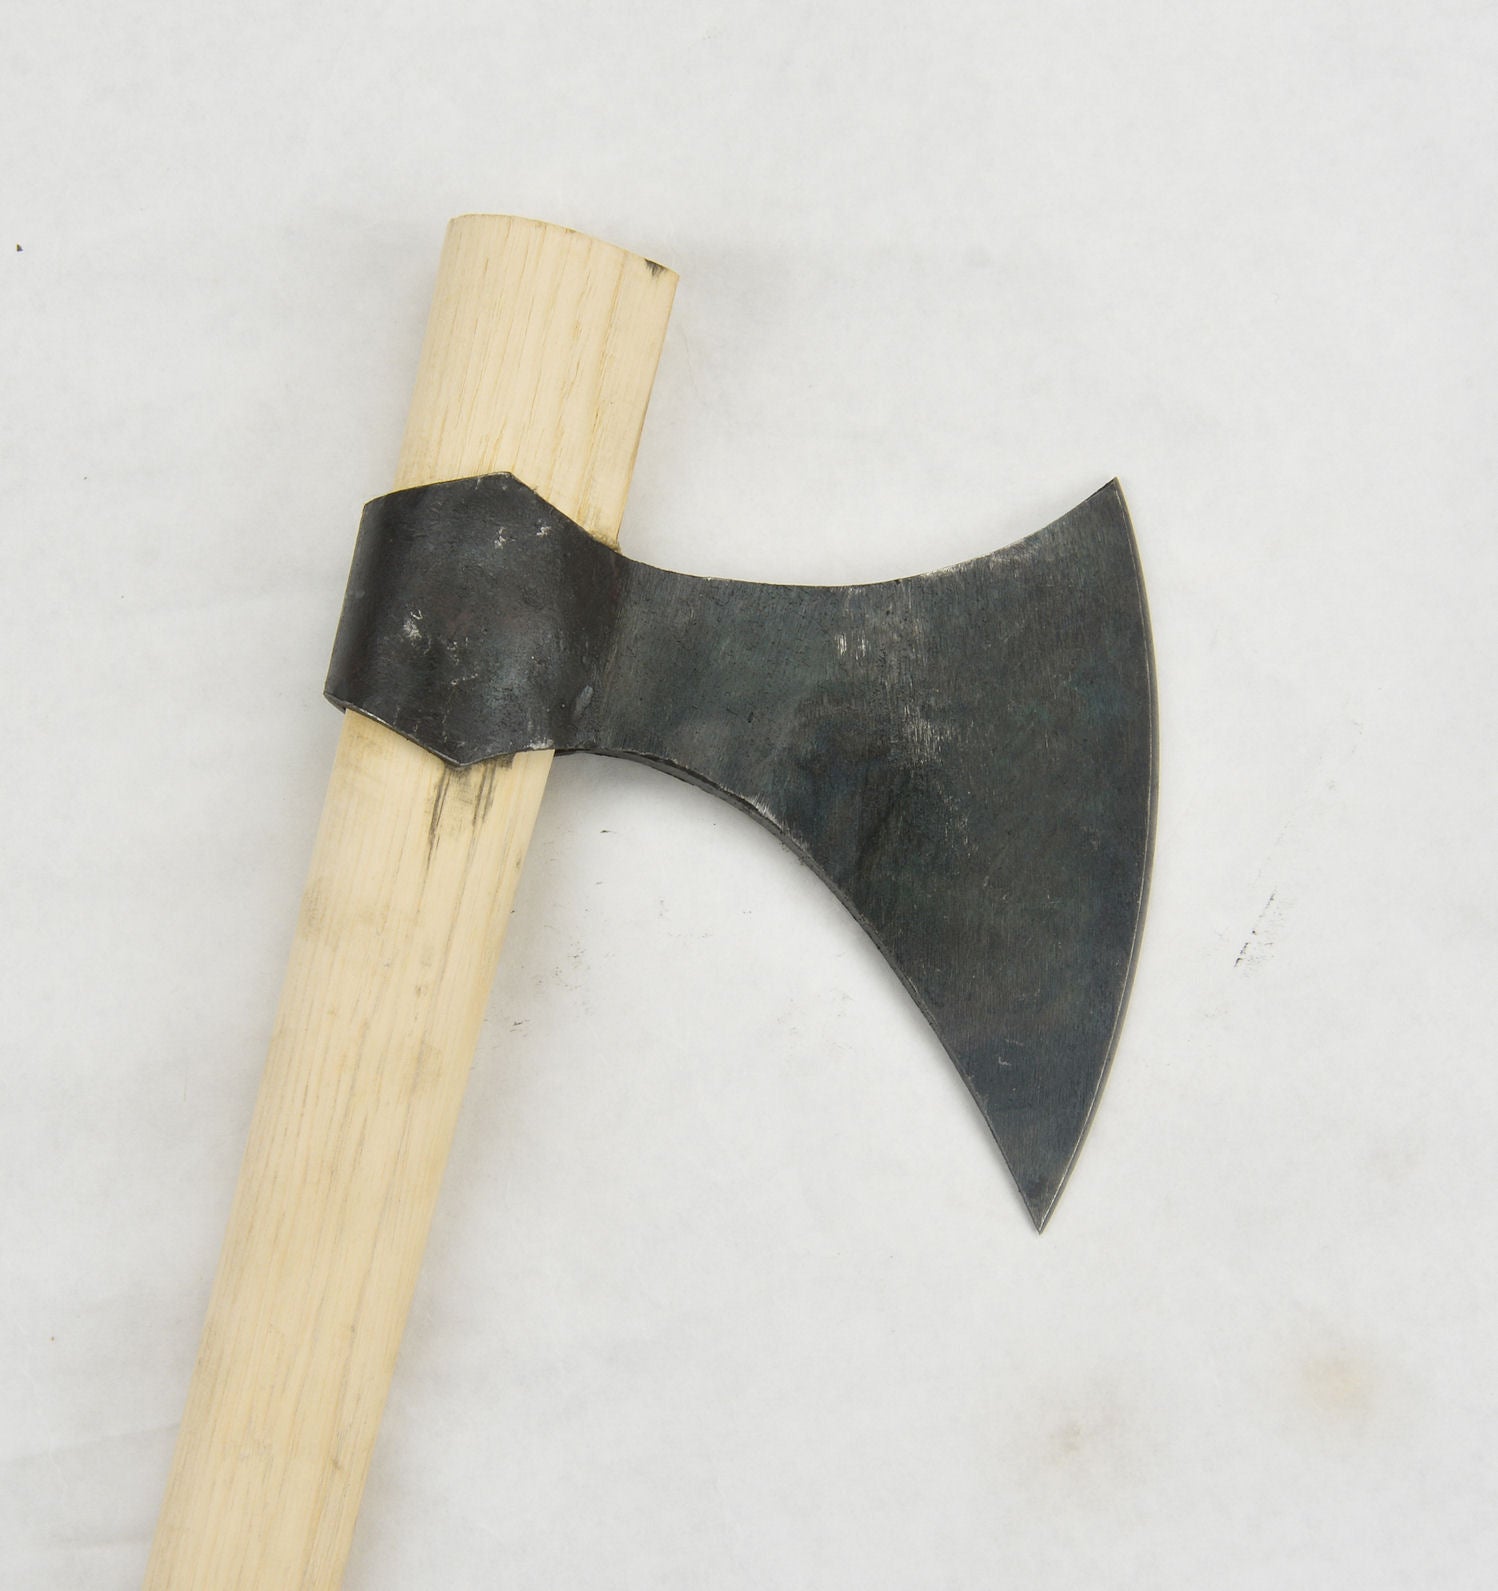 close up of the black ax head